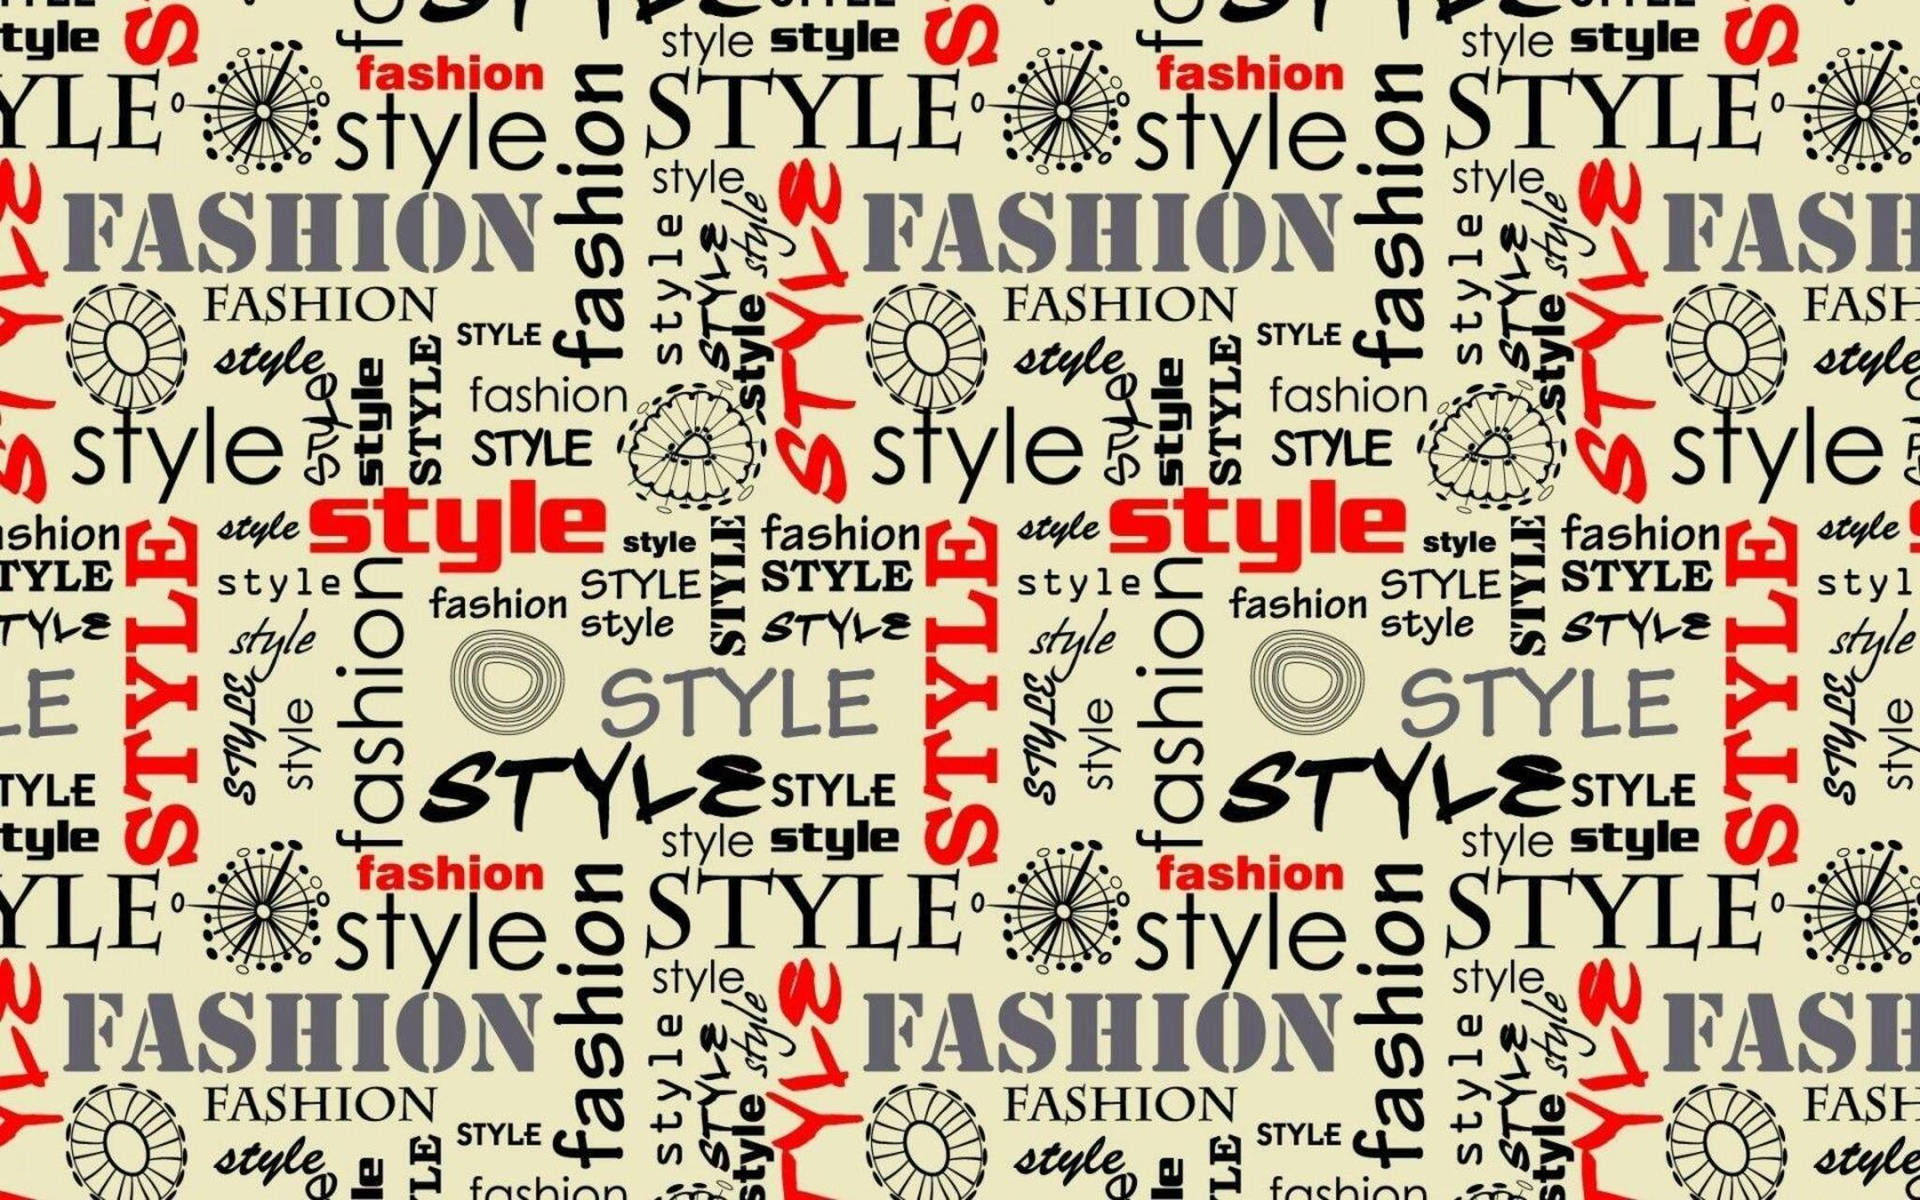 Fashion Style Word Art wallpaper.